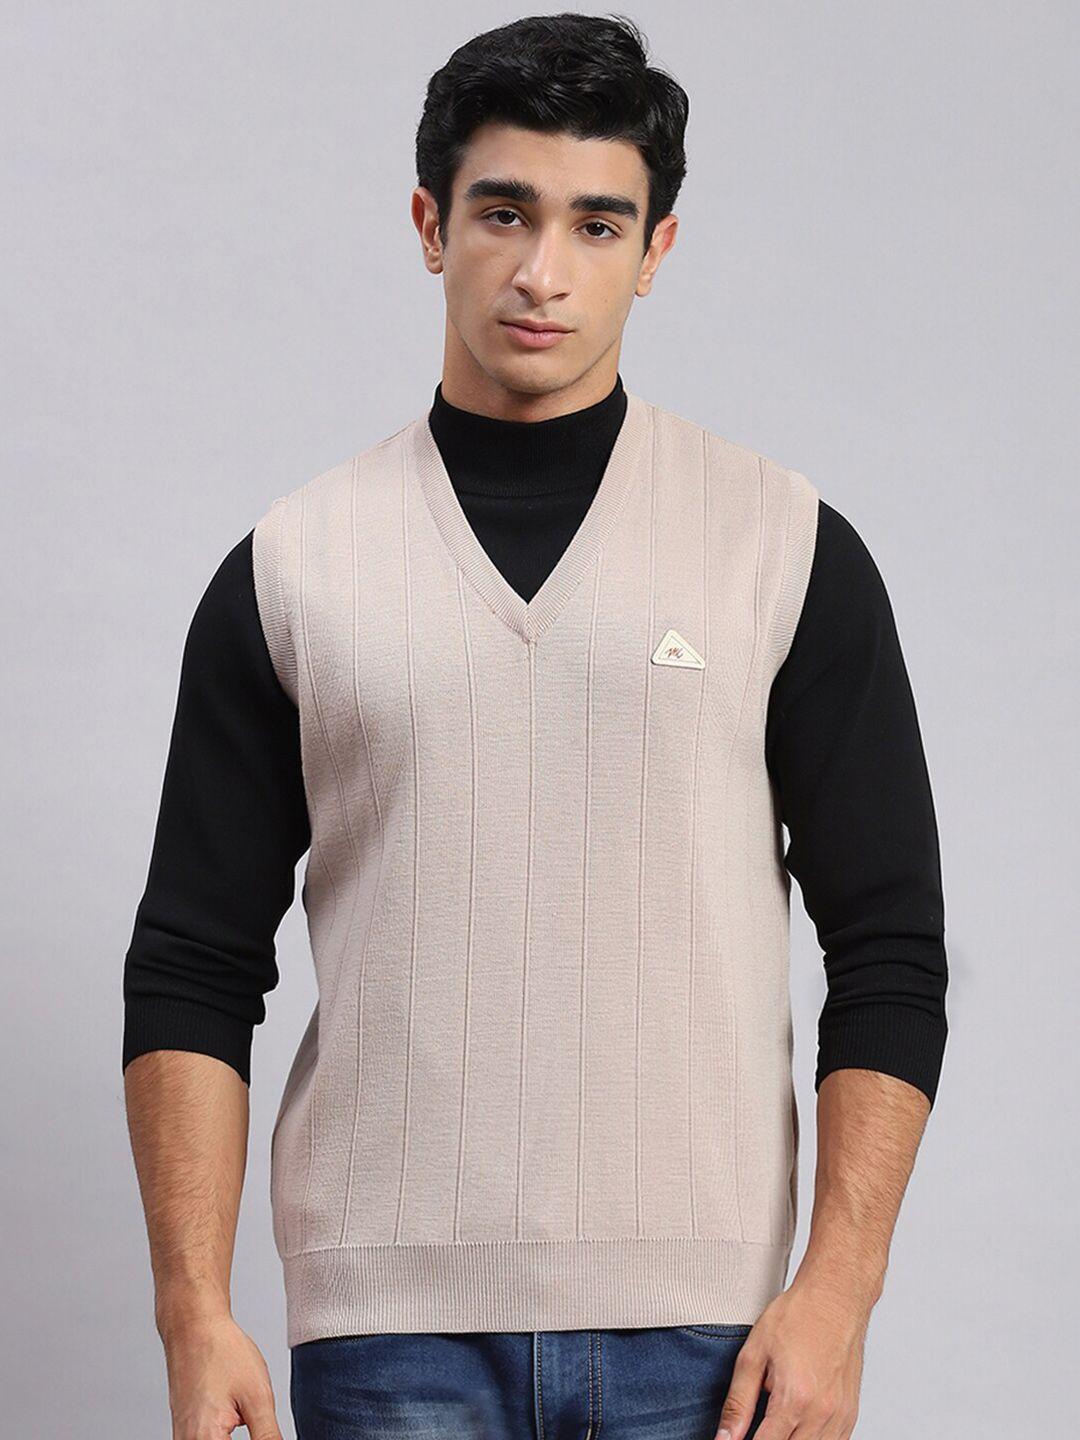 monte carlo striped v-neck sleeveless pure wool sweater vest